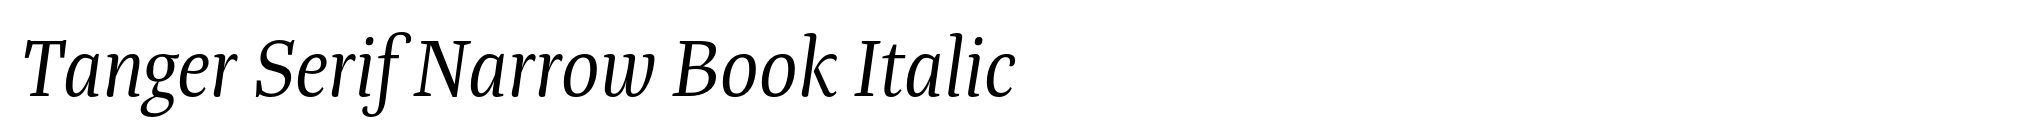 Tanger Serif Narrow Book Italic image